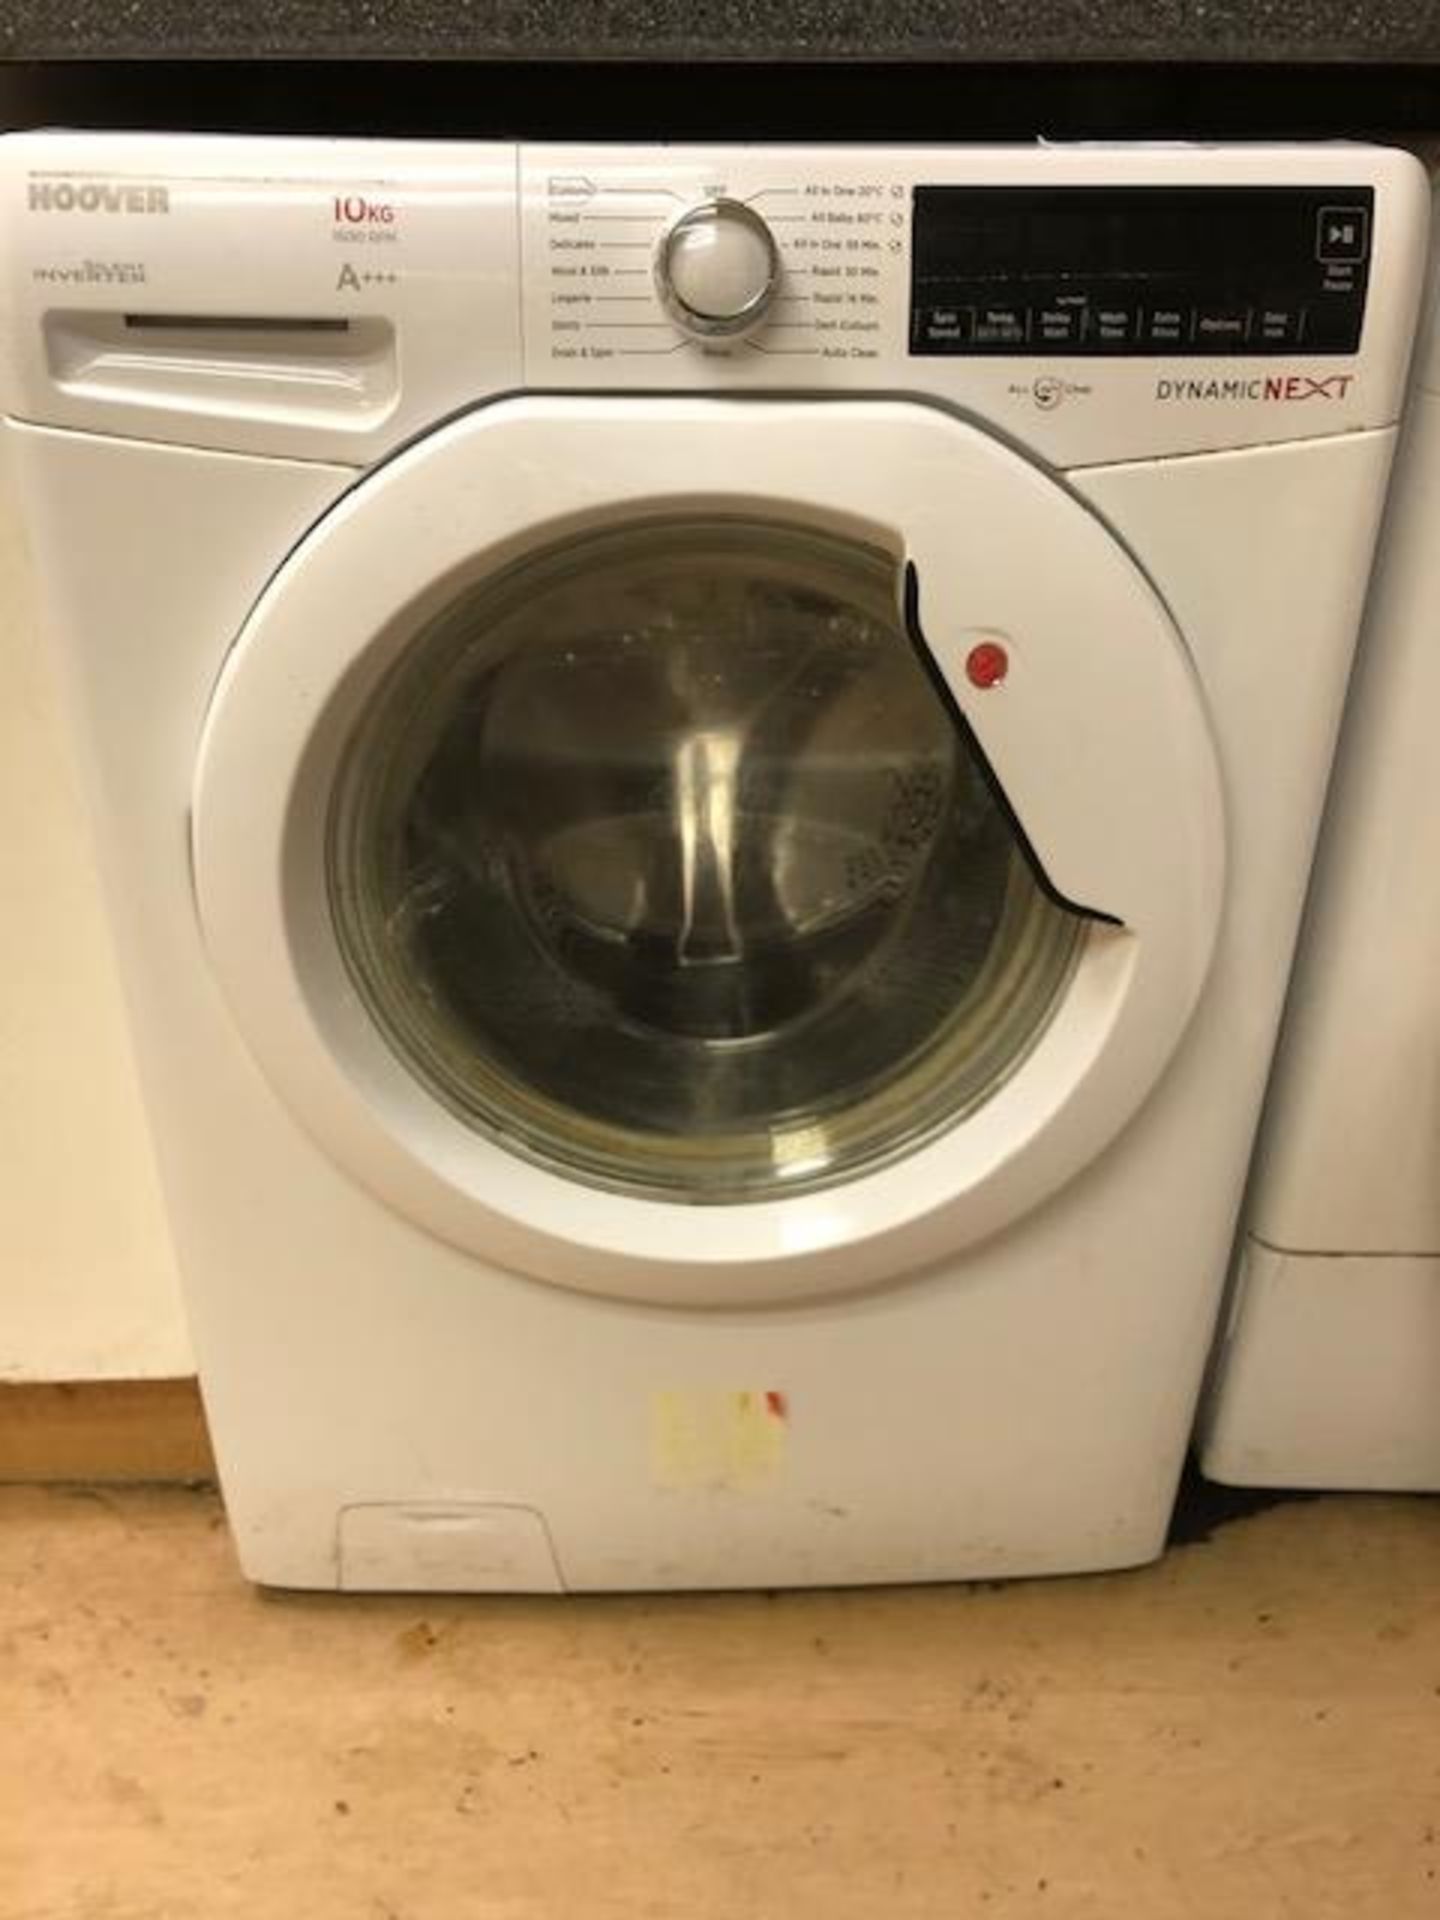 Hoover Dynamic NEXT washing machine